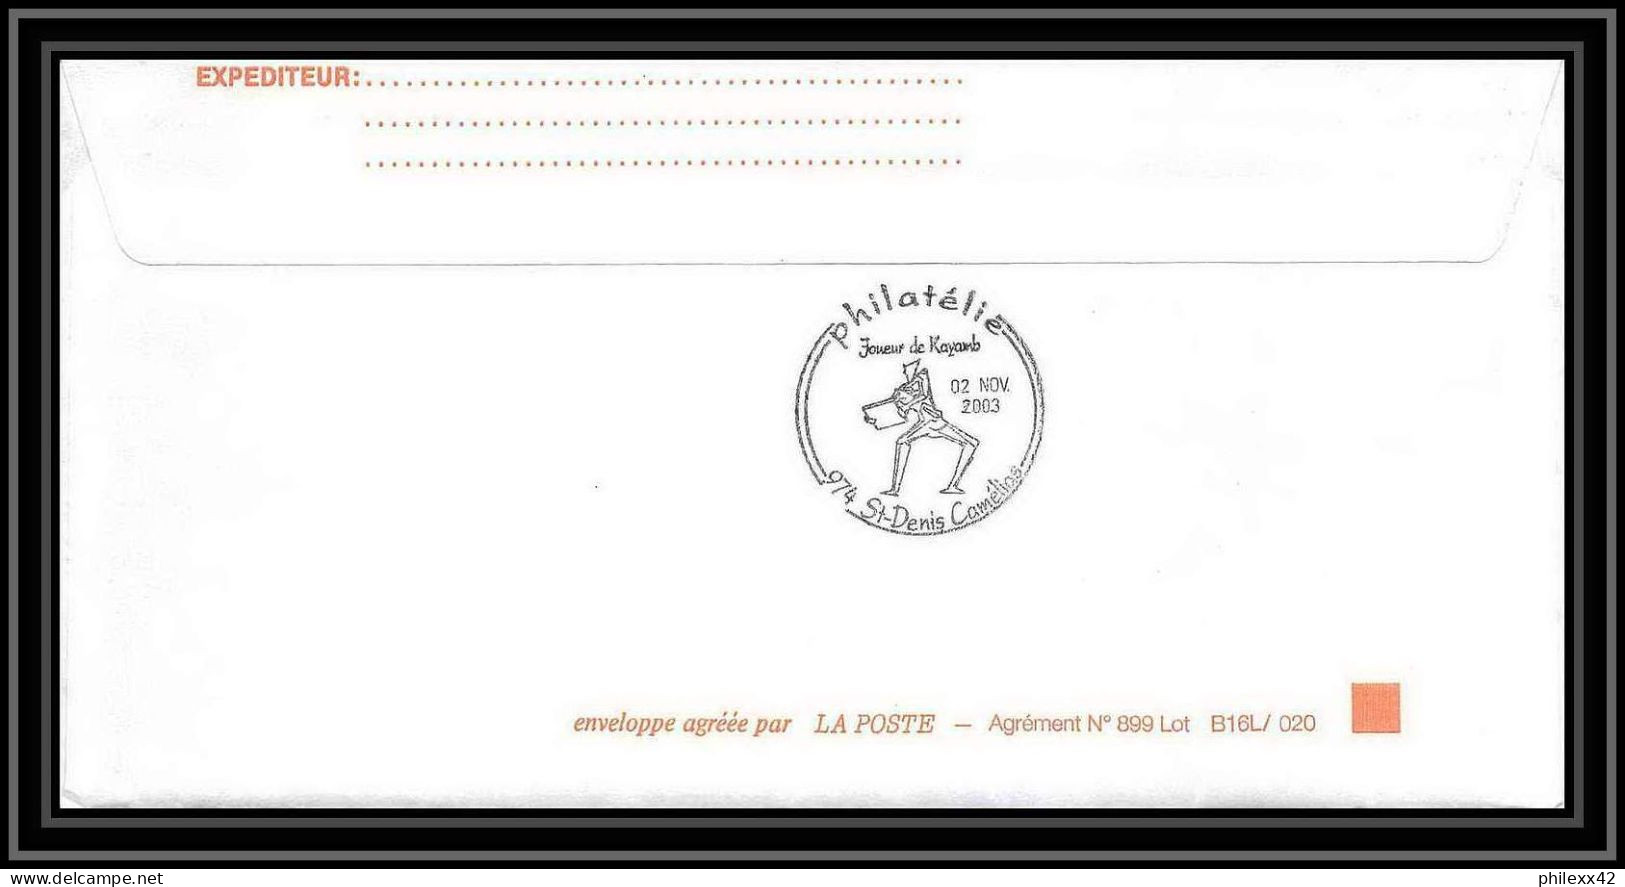 2416 Dufresne 2 Signé Signed Op 2003/3 N°363 12/11/2003 ANTARCTIC Terres Australes (taaf) Lettre Cover - Briefe U. Dokumente